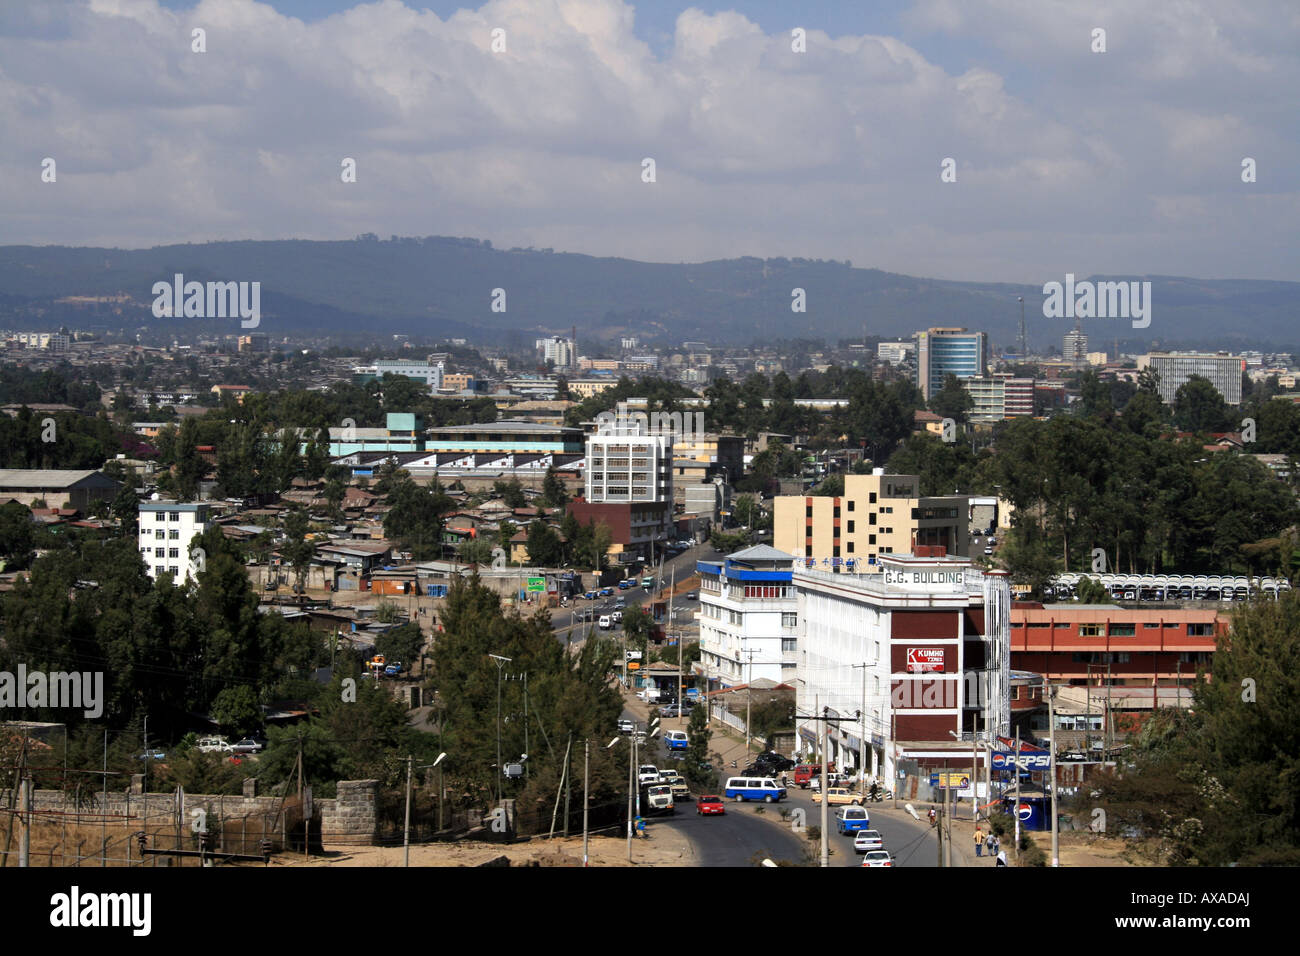 Southwest Addis Ababa (Old Airport), looking towards the Entoto Mountains, Ethiopia Stock Photo